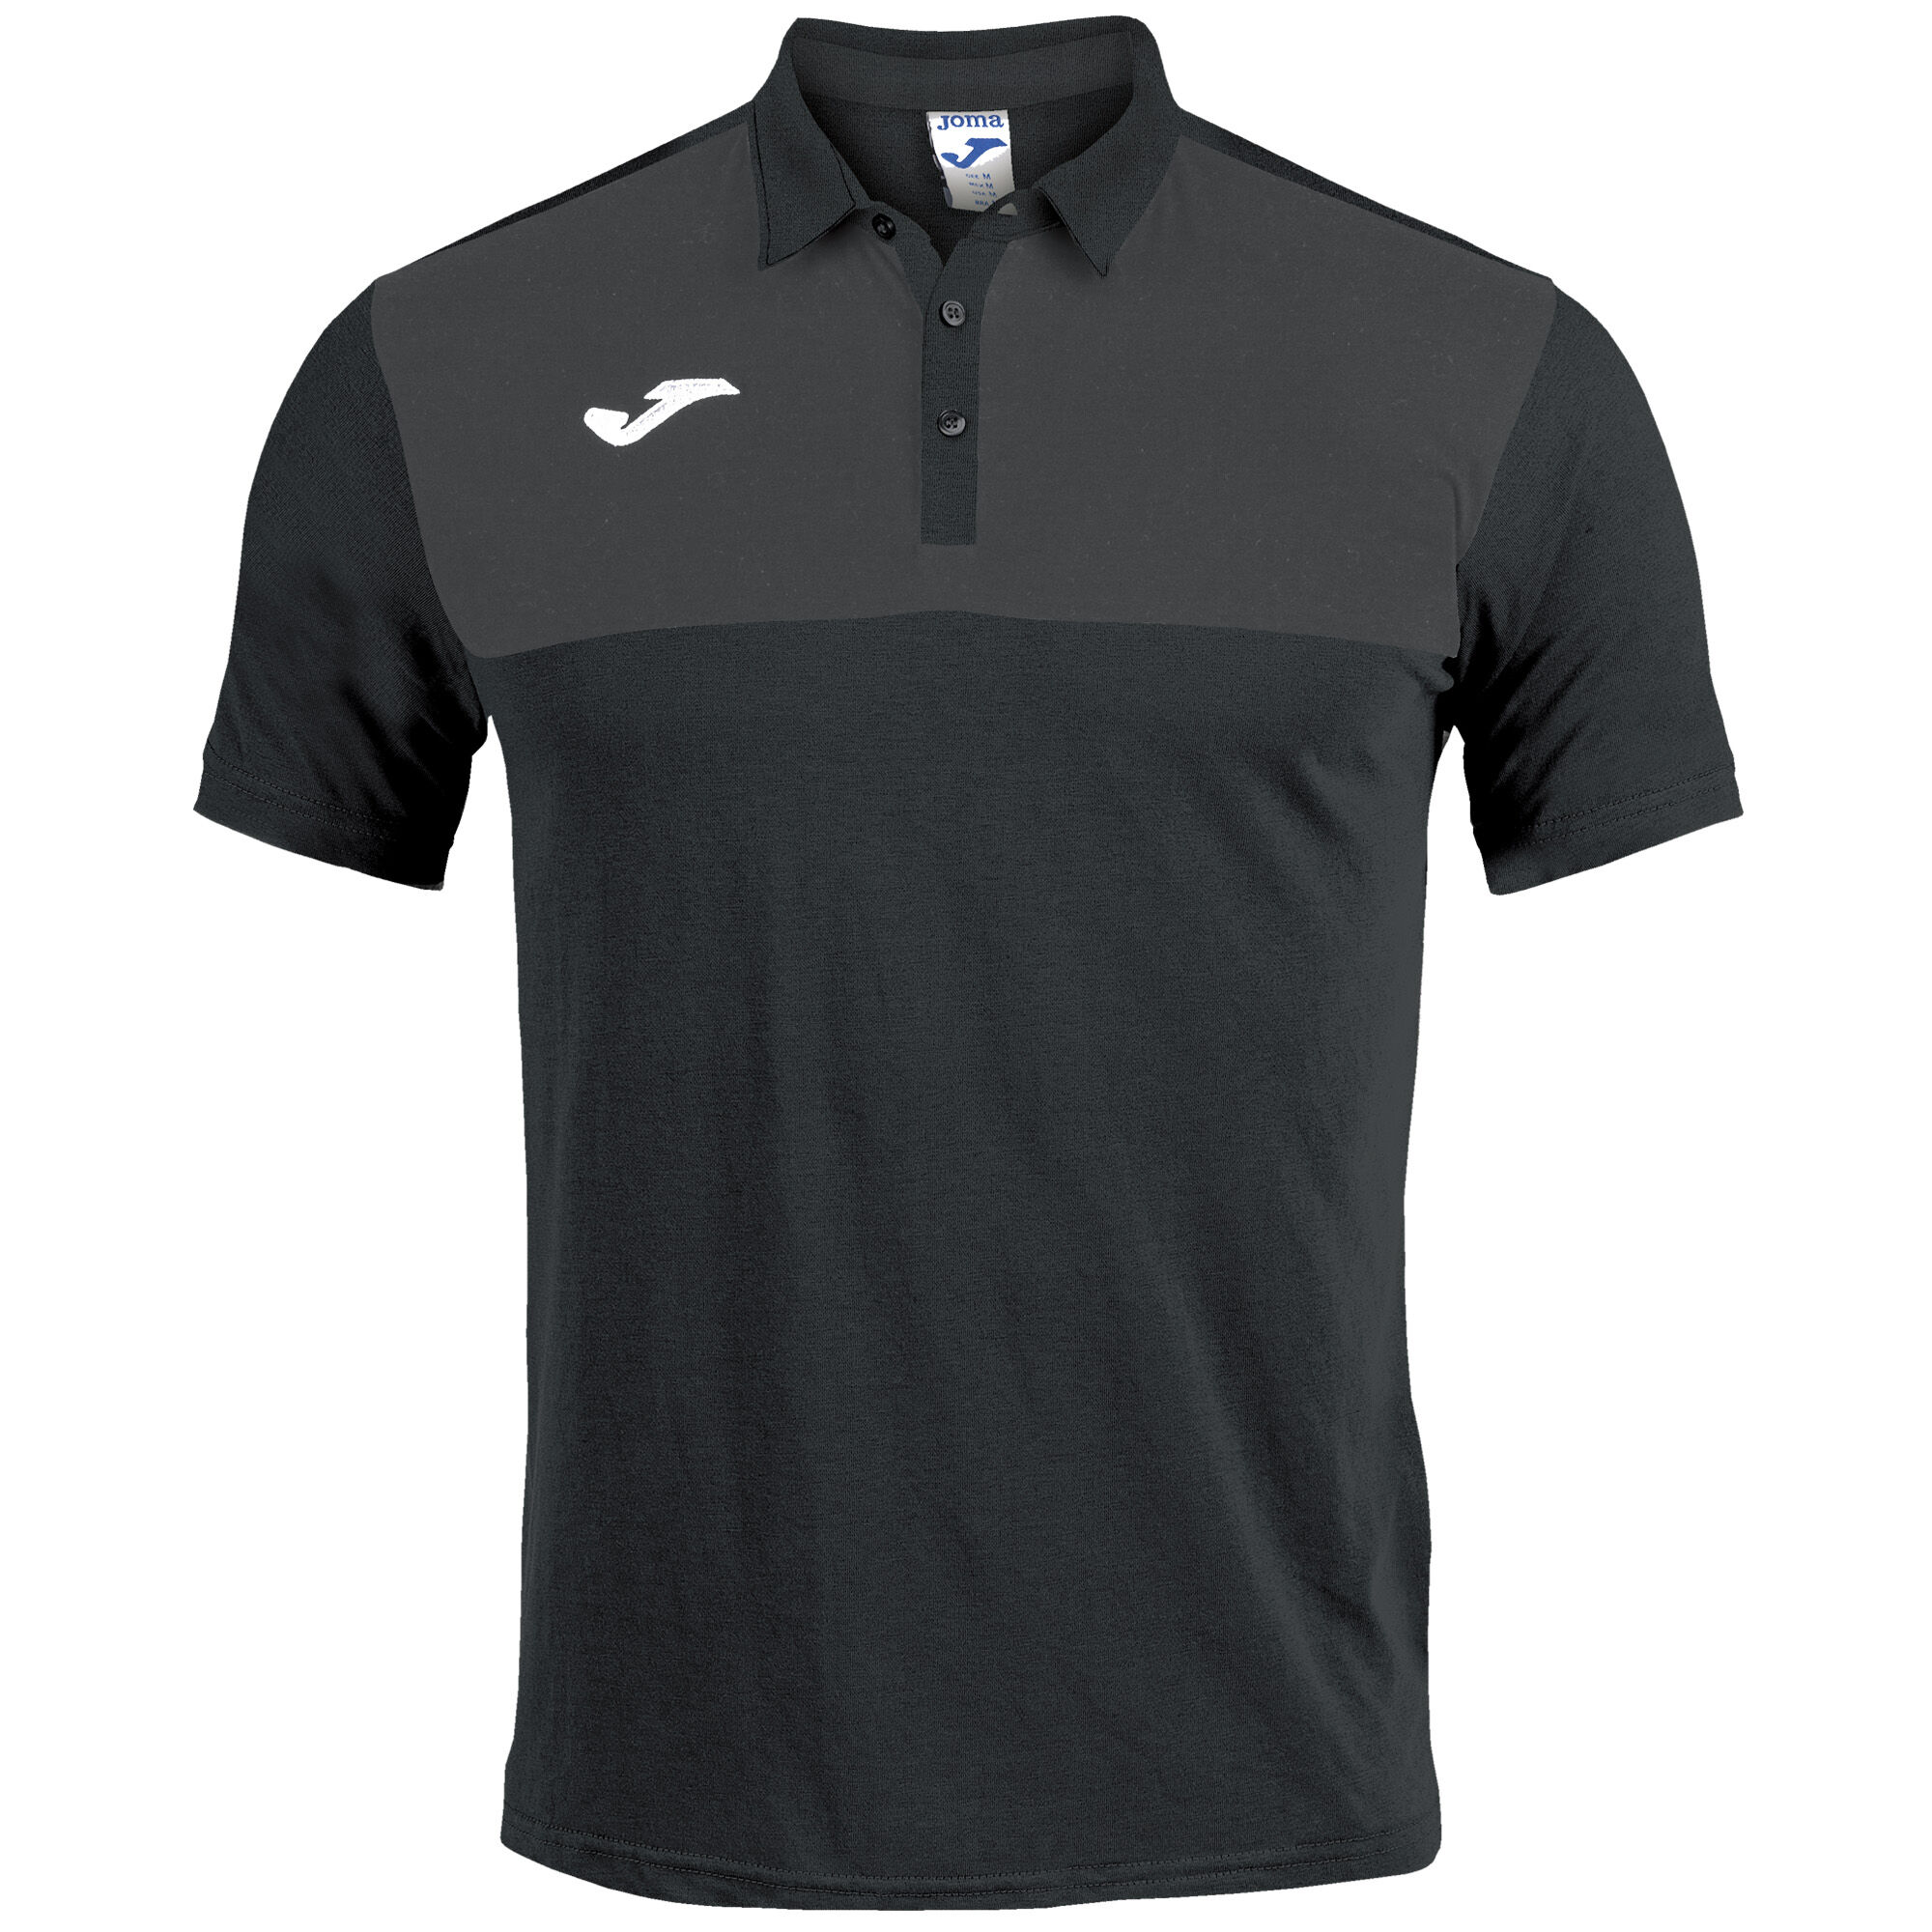 Polo shirt short-sleeve man Winner black dark gray